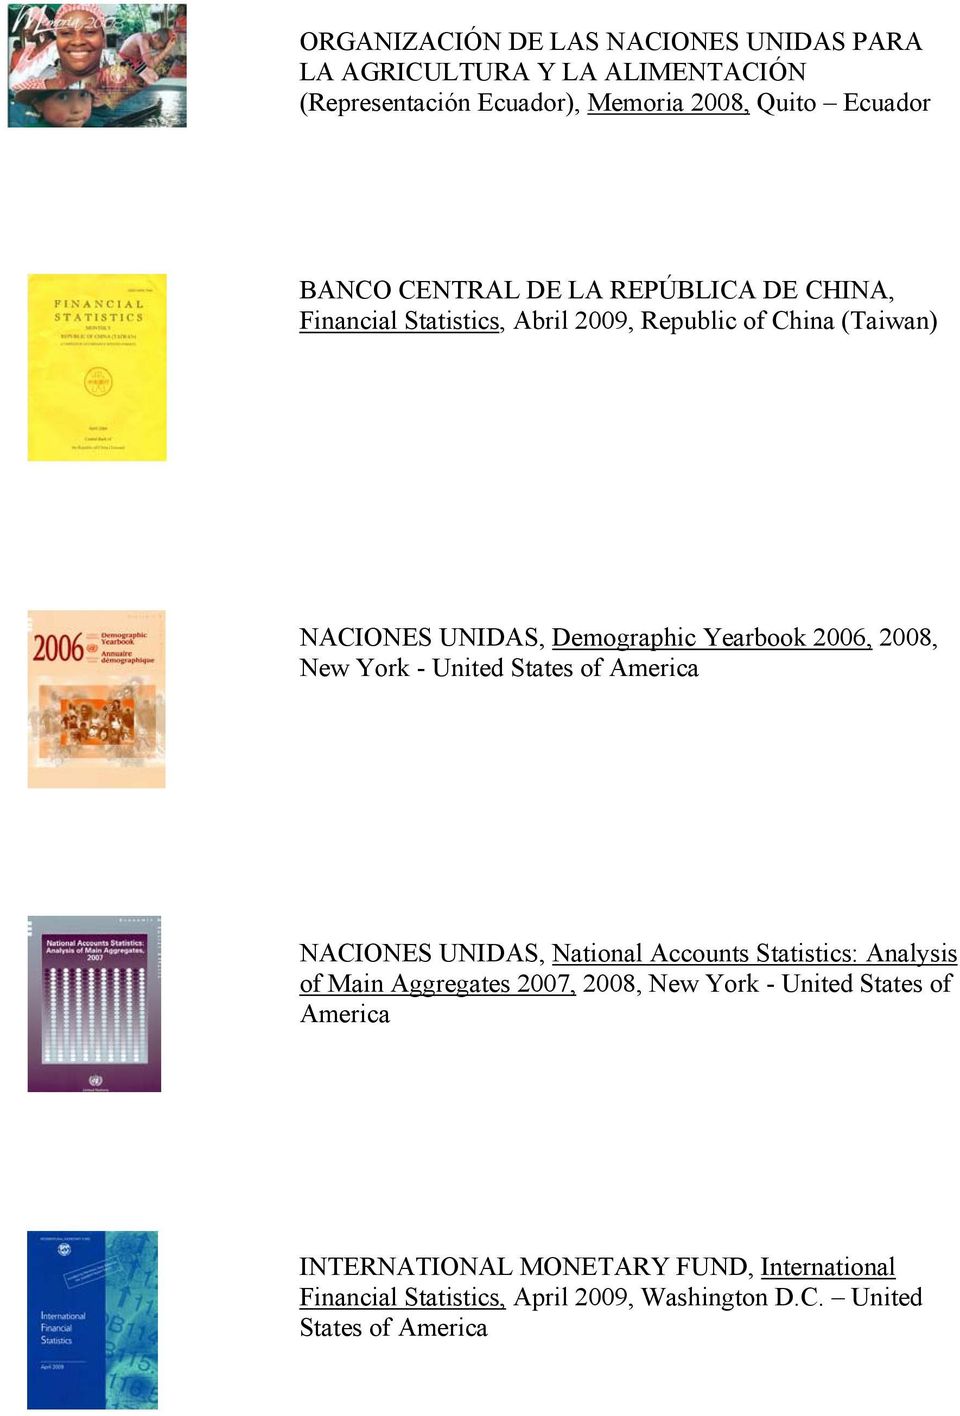 2008, New York - United States of America NACIONES UNIDAS, National Accounts Statistics: Analysis of Main Aggregates 2007, 2008, New York